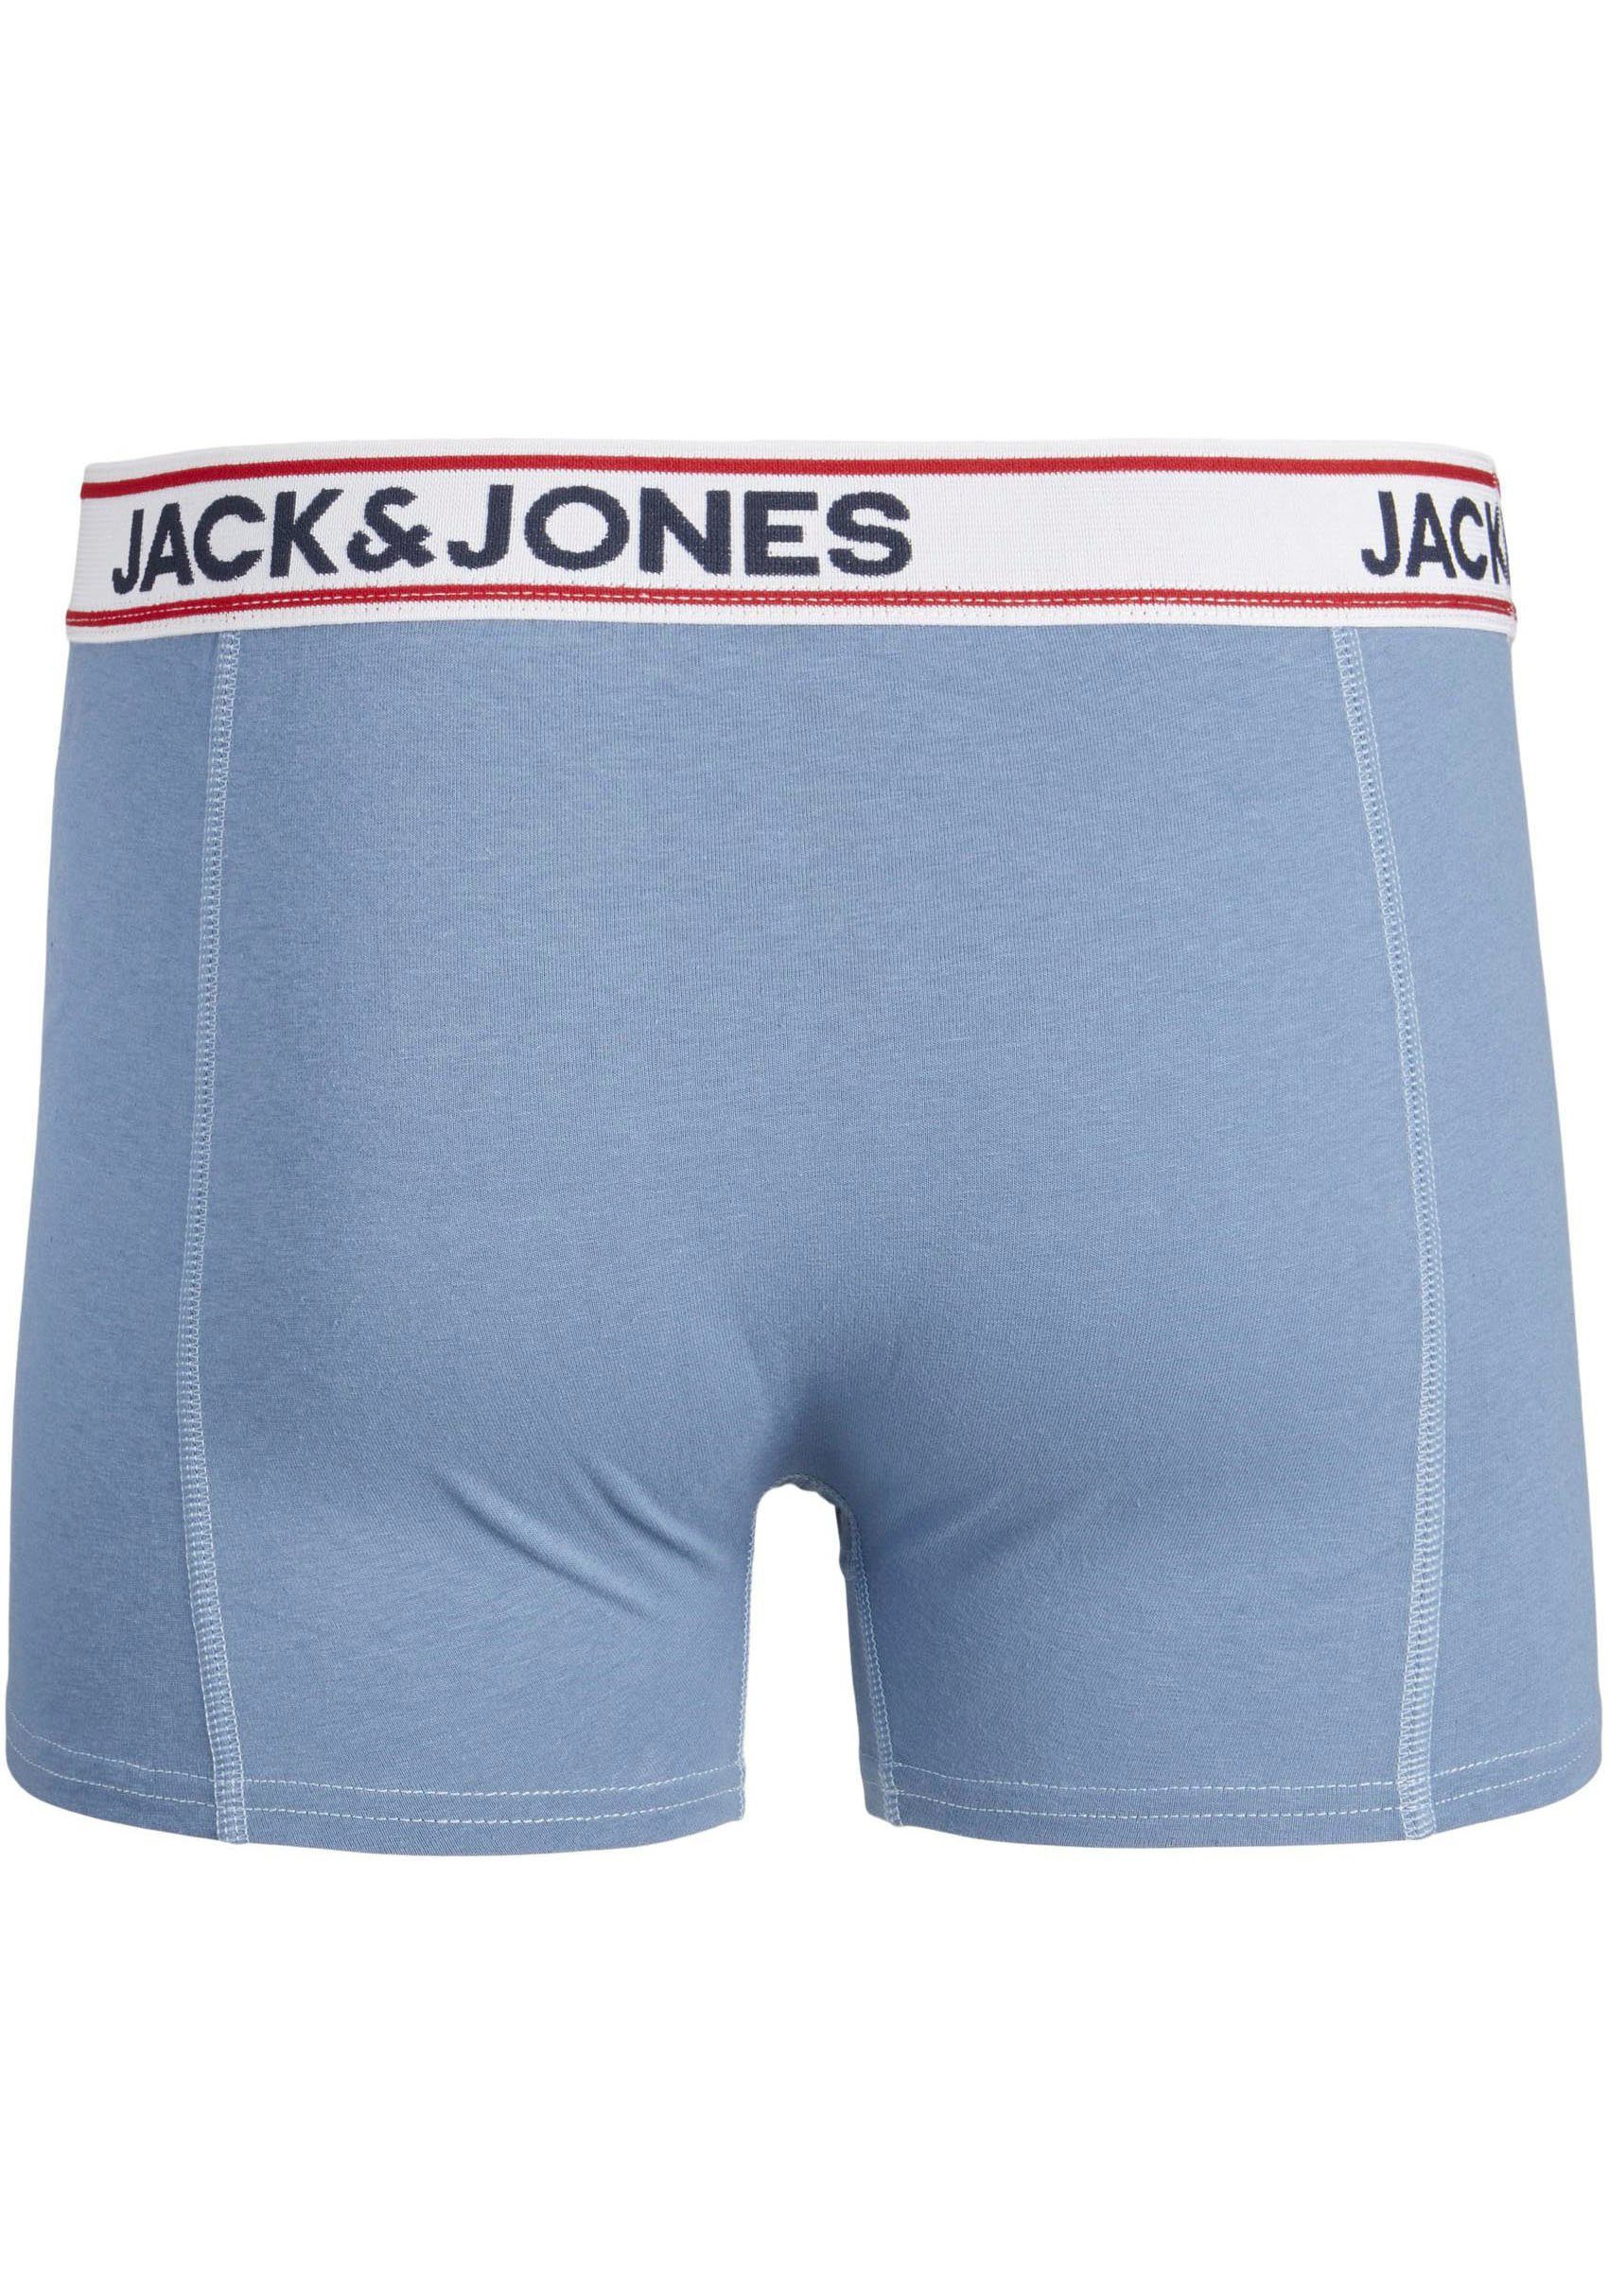 PACK 3 Jack / NOOS Trunk TRUNKS navy 3-St) blazer coronet JACJAKE (Packung, Jones &